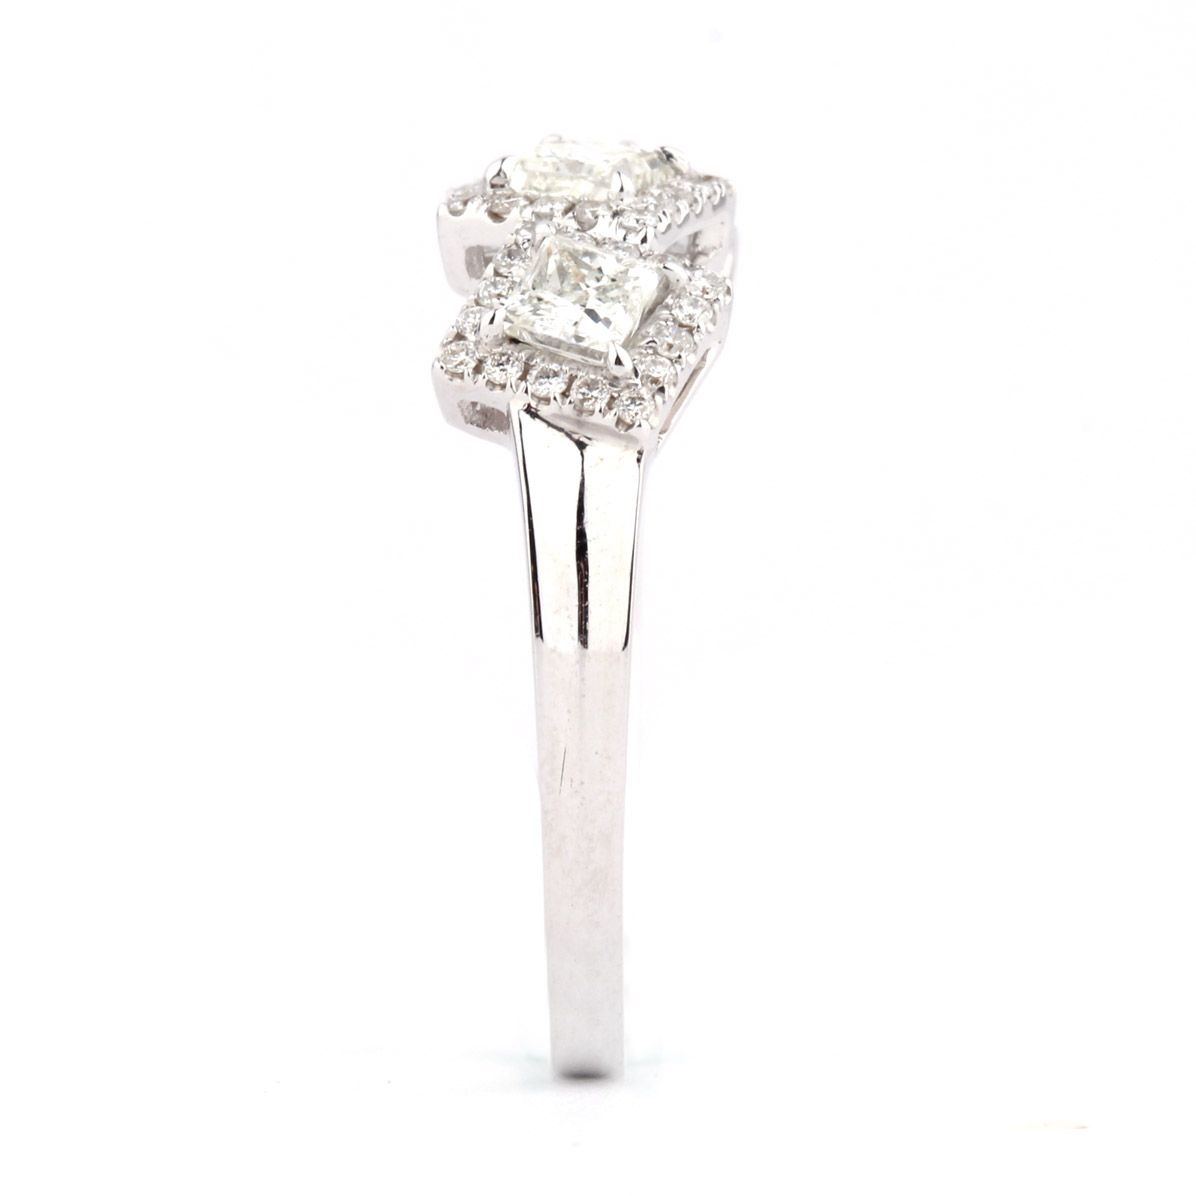 White Diamond Ring, 0.45 Ct. (0.60 Ct. TW), Princess shape, EG_Lab Certified, J5826063838